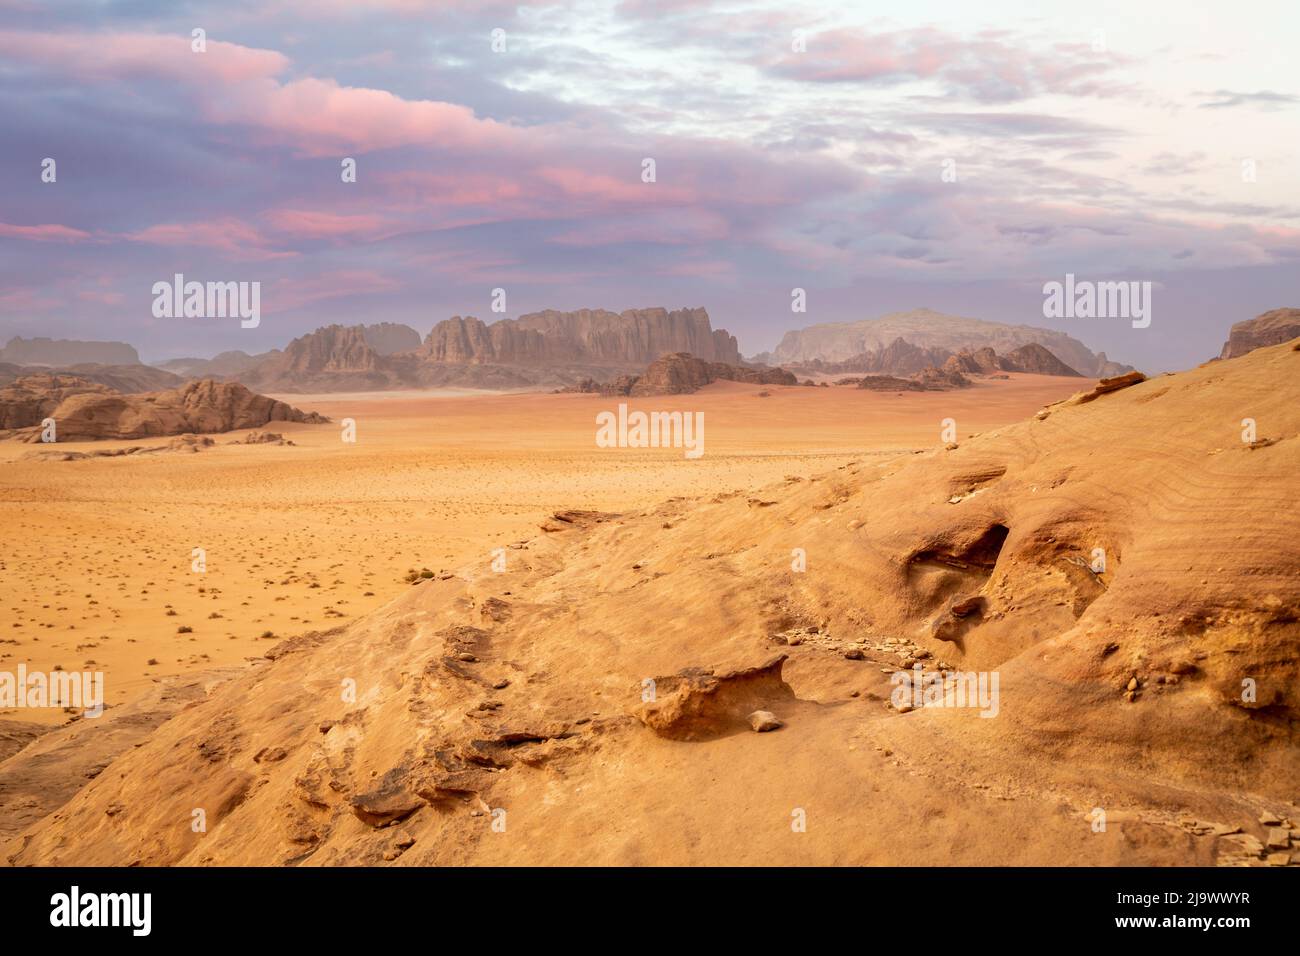 Red sands, mountains, dramatic sky and marthian landscape panorama of Wadi Rum desert, Jordan Stock Photo